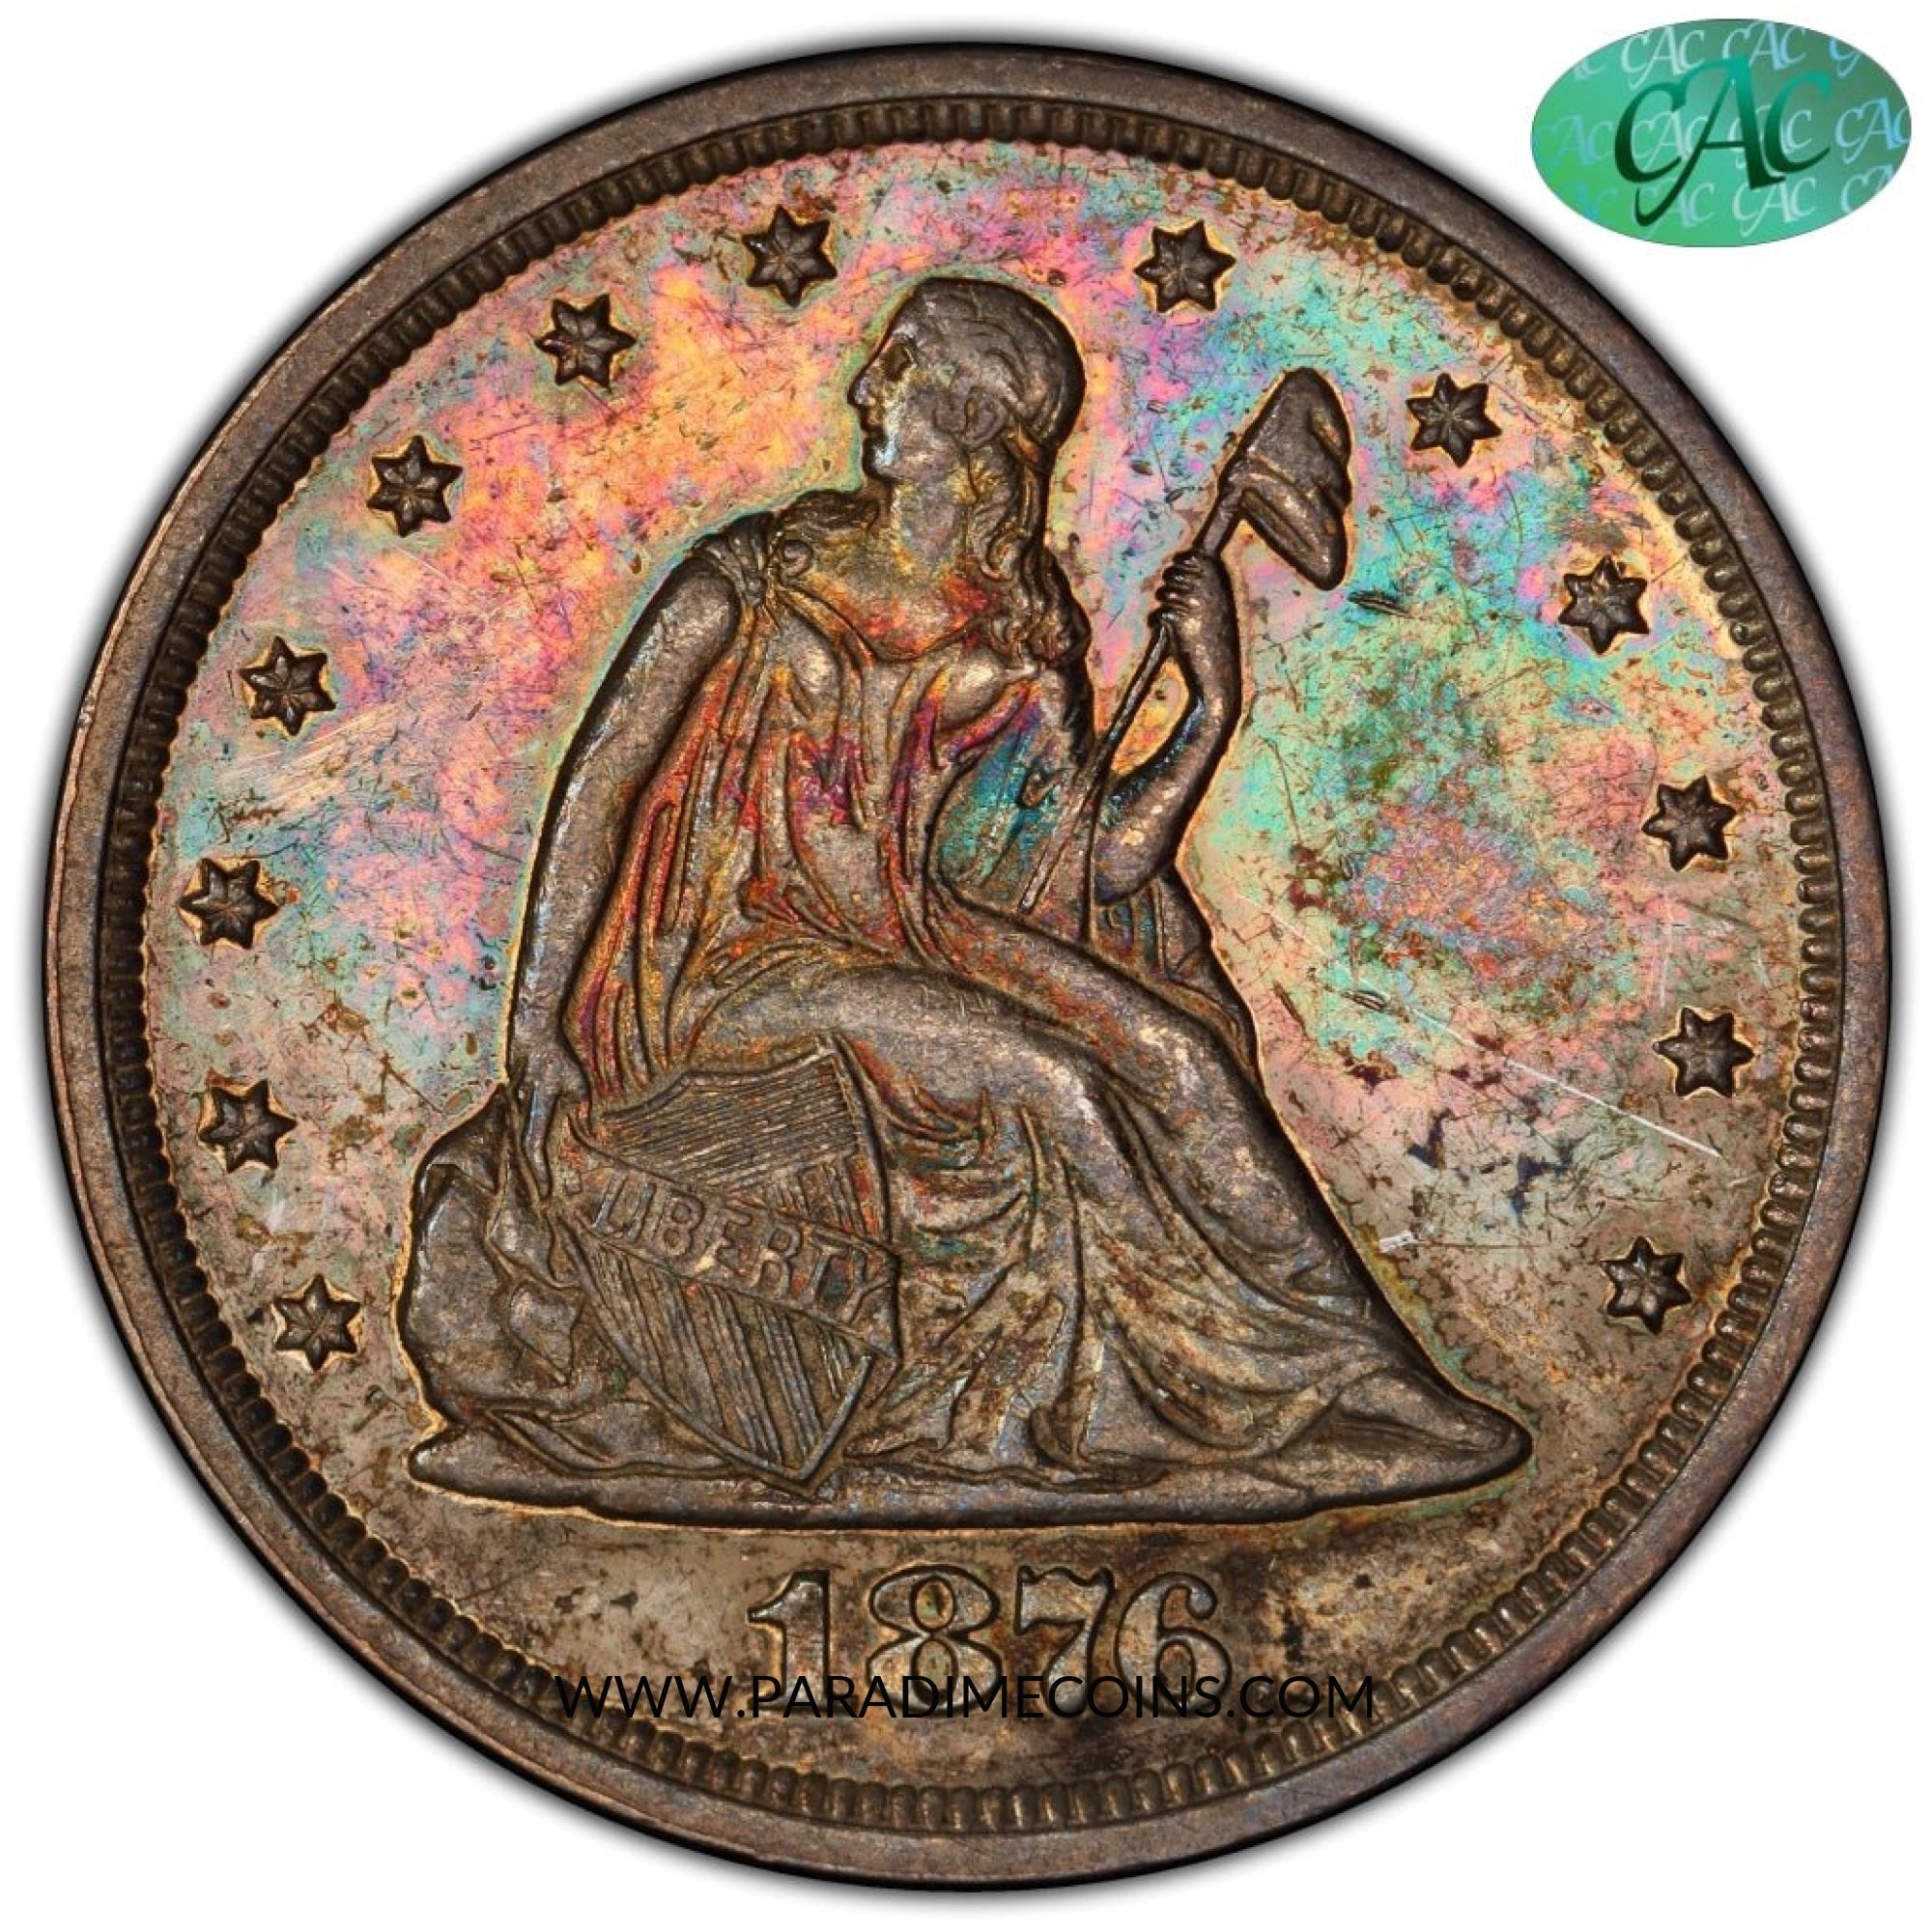 1876 20C PR61 PCGS CAC - Paradime Coins US Coins For Sale